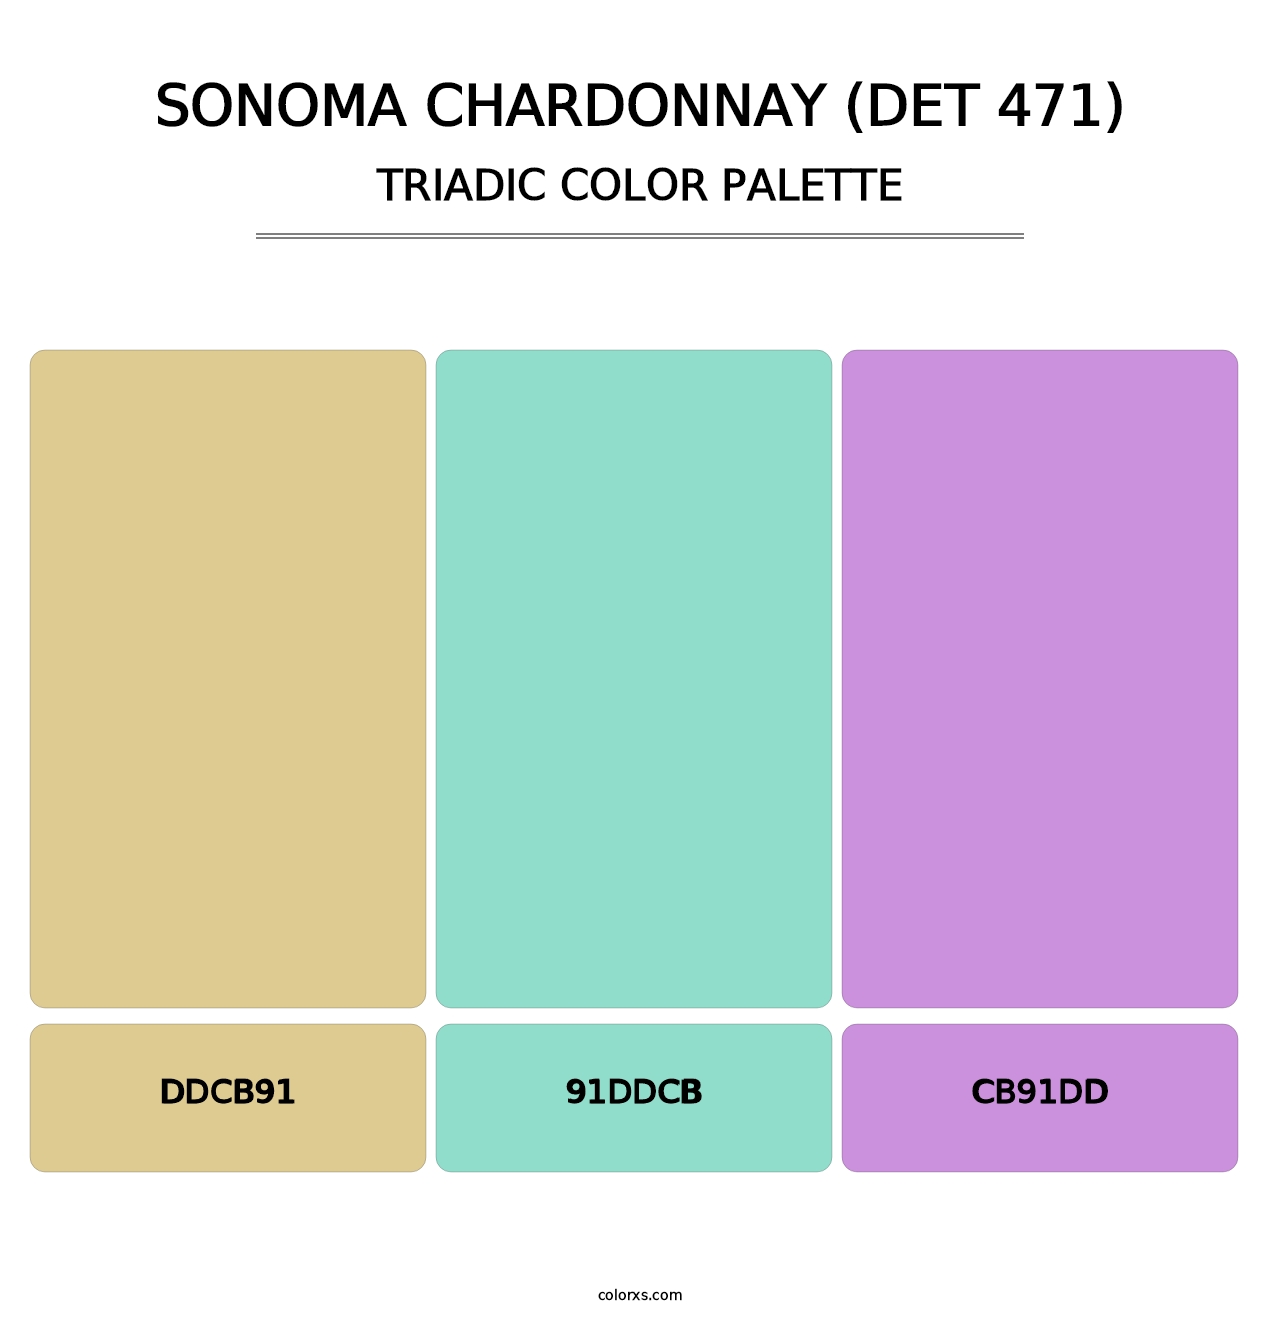 Sonoma Chardonnay (DET 471) - Triadic Color Palette